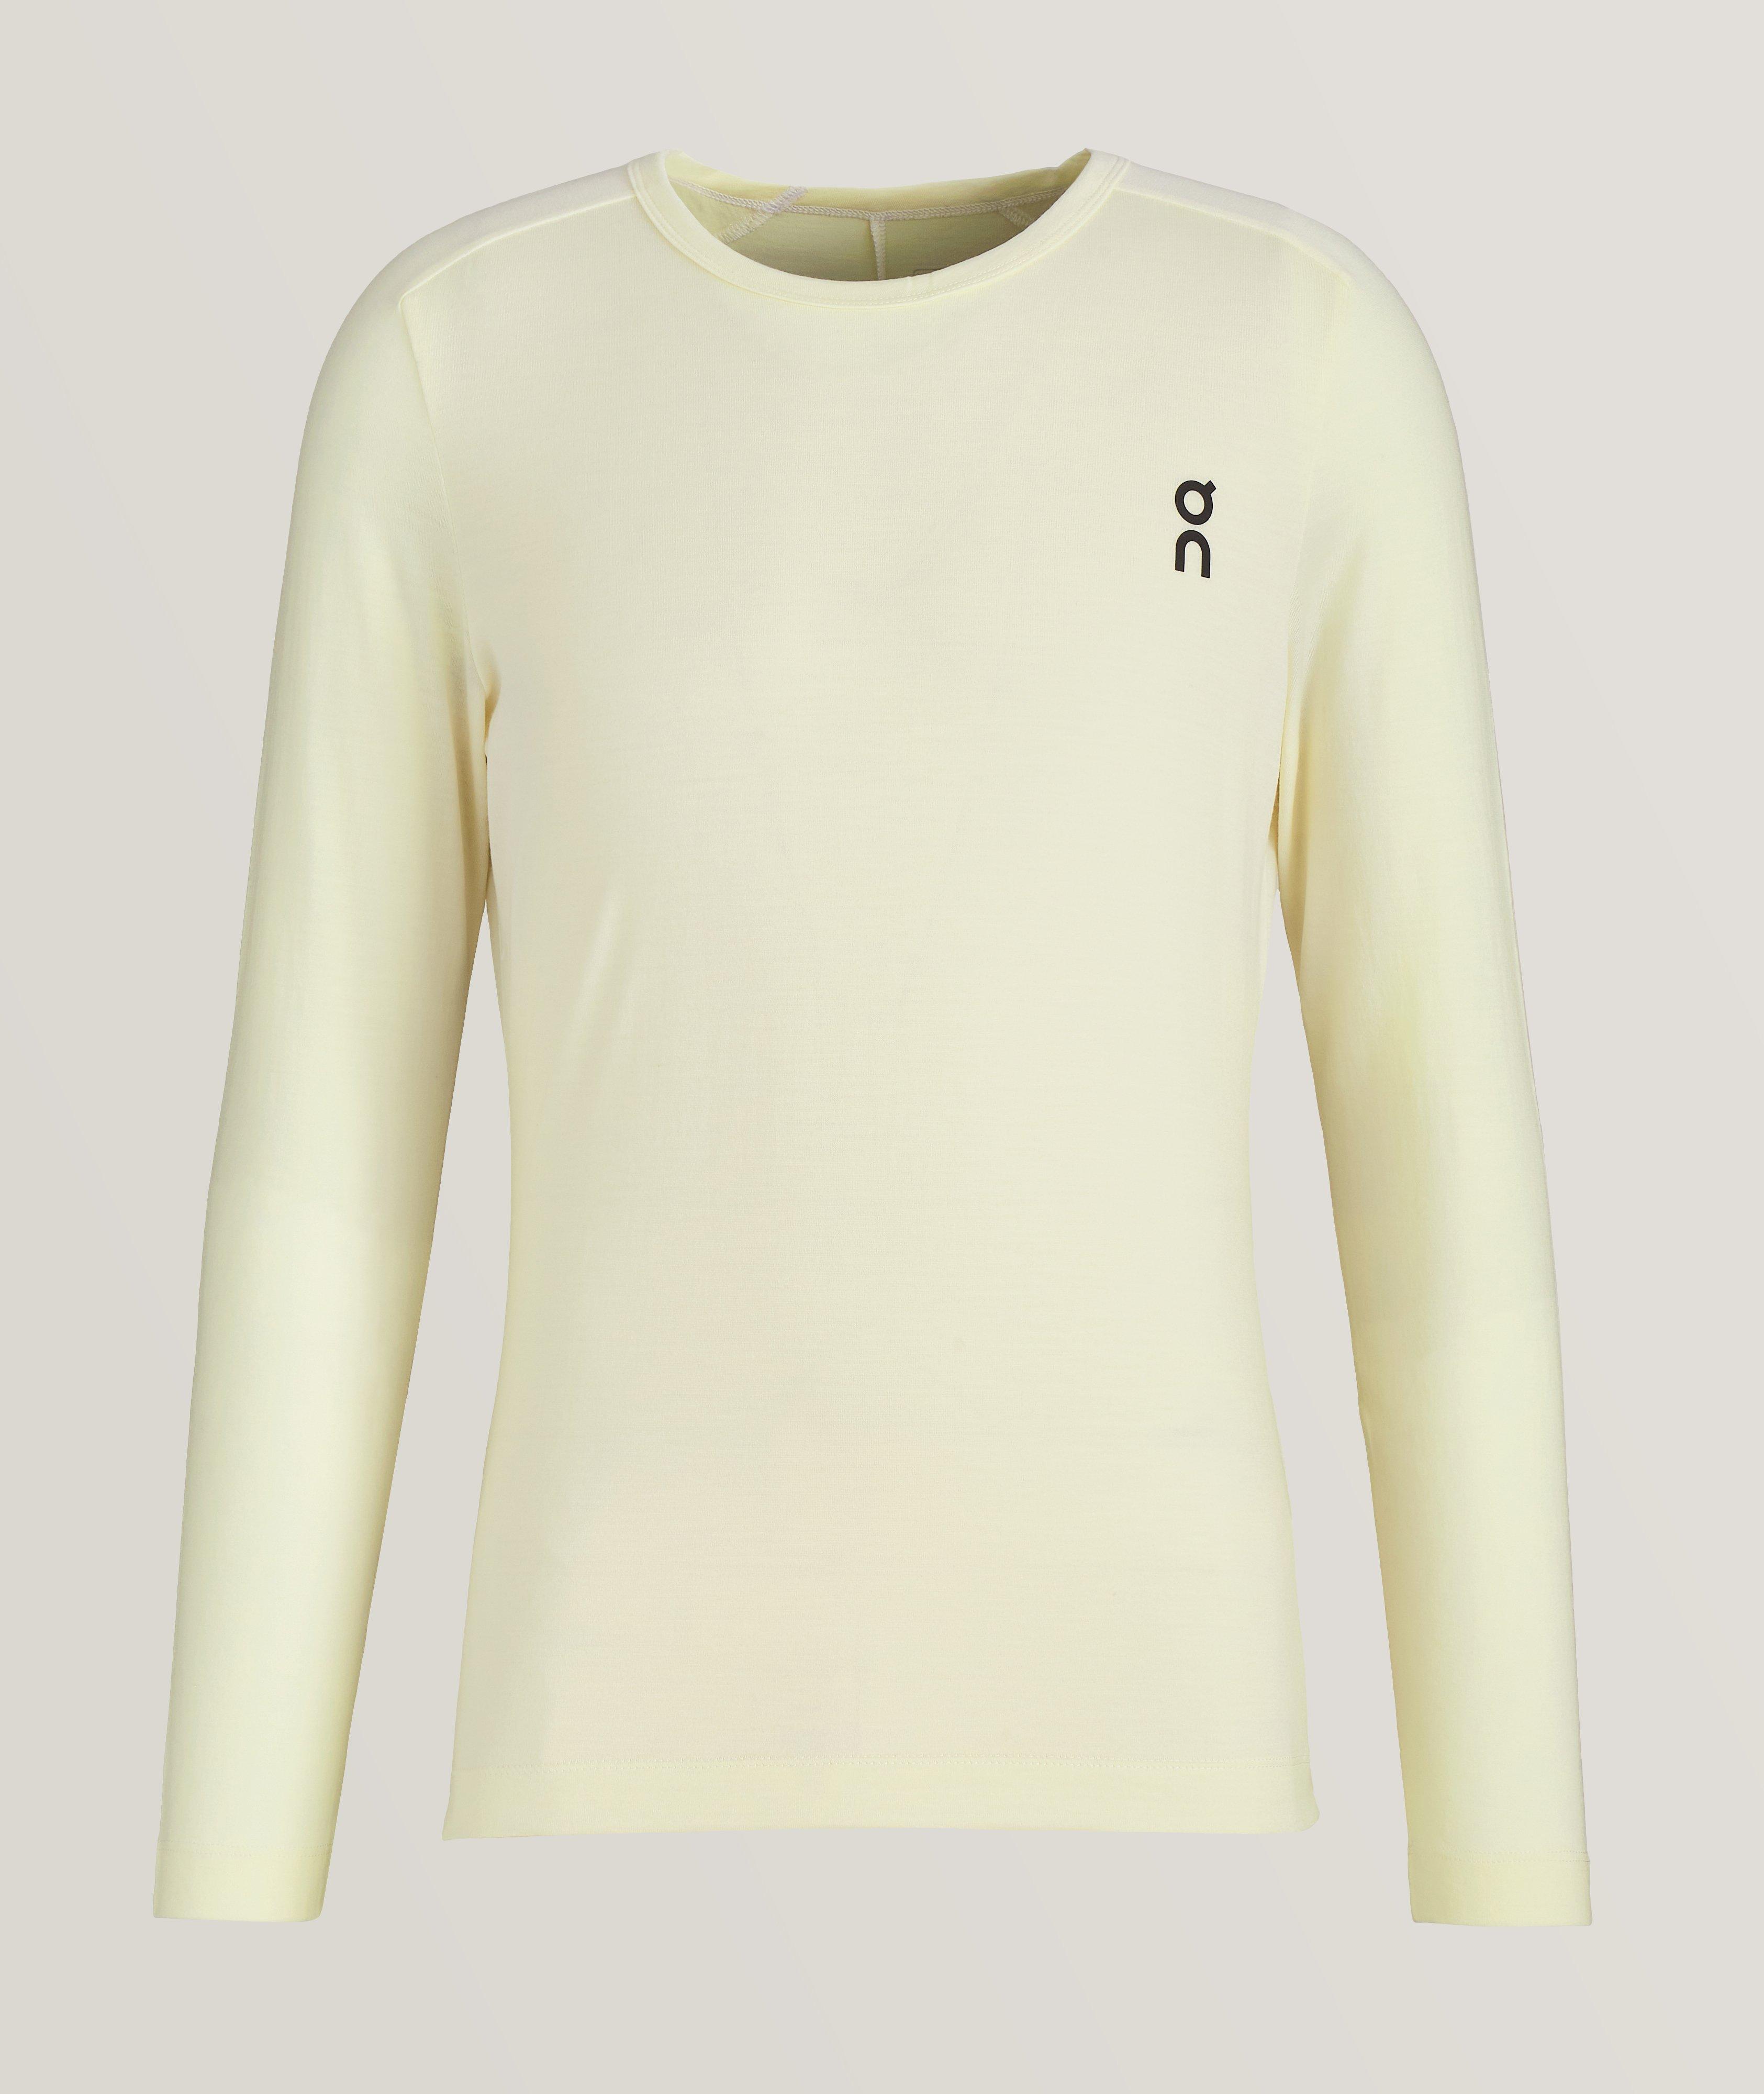 Merino Wool Long Sleeve T-Shirt image 0